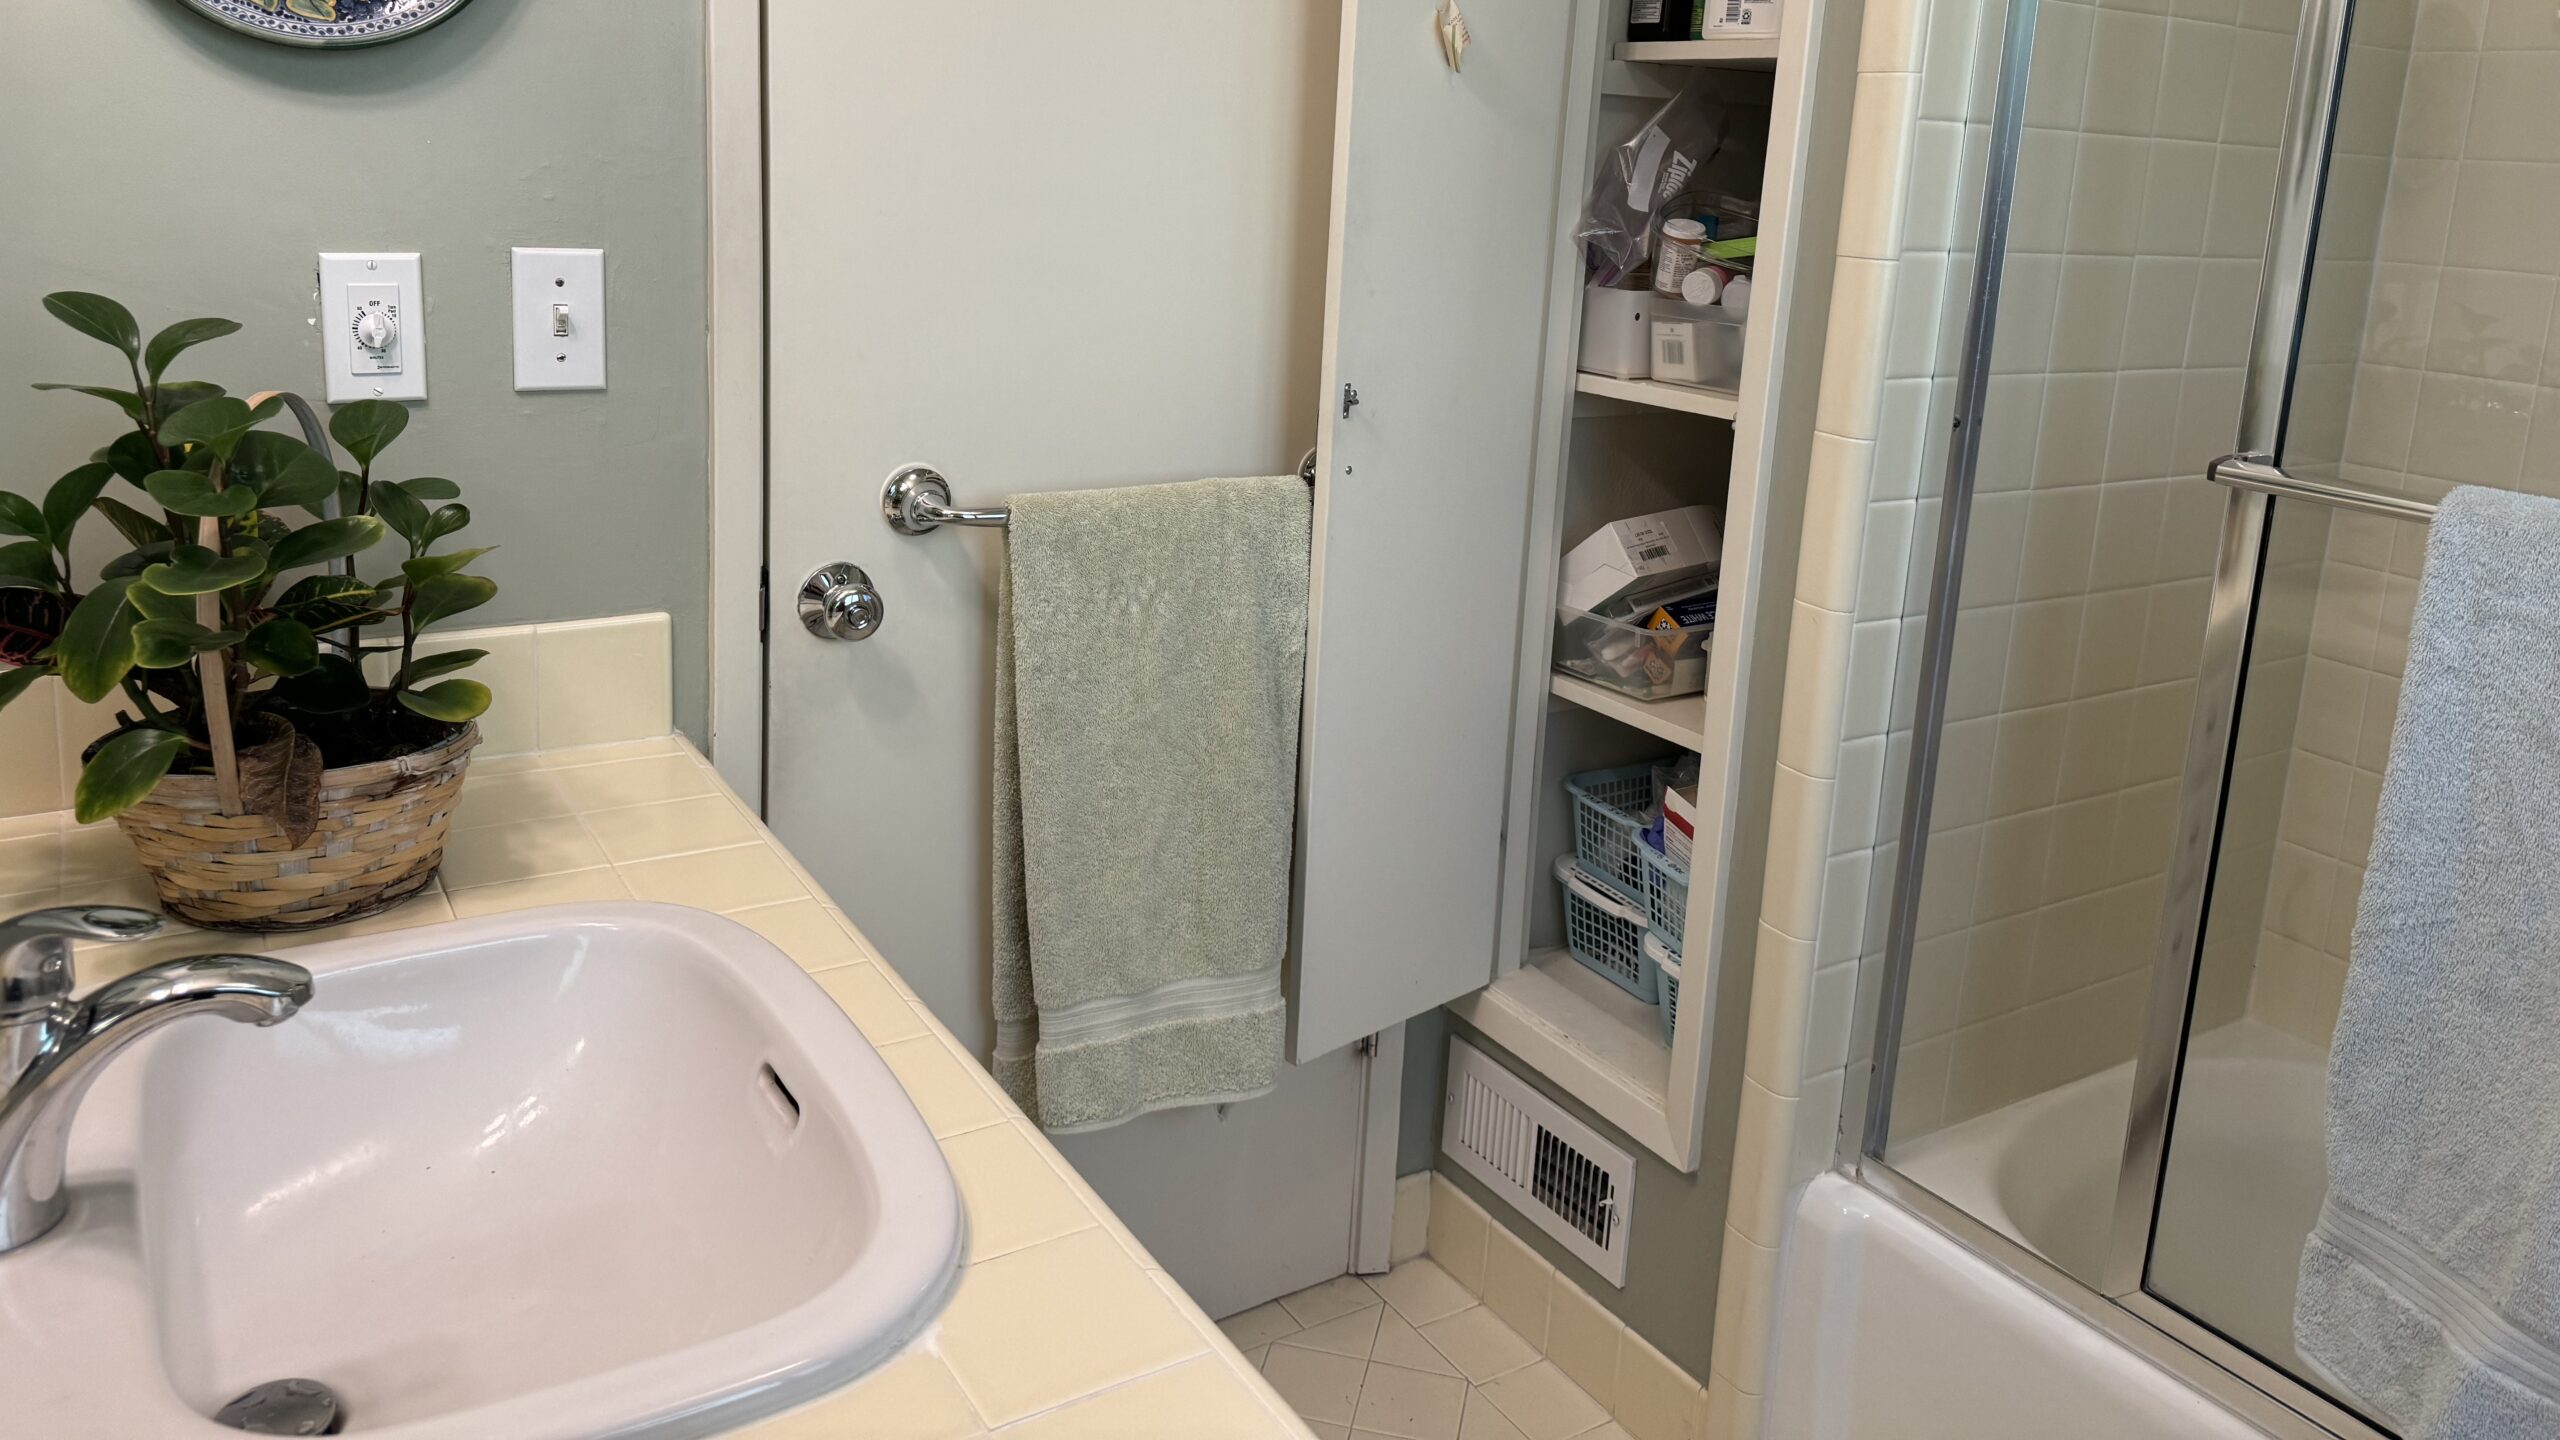 widowed-a-bathroom-for-one tub-shower-with-awkward-closet